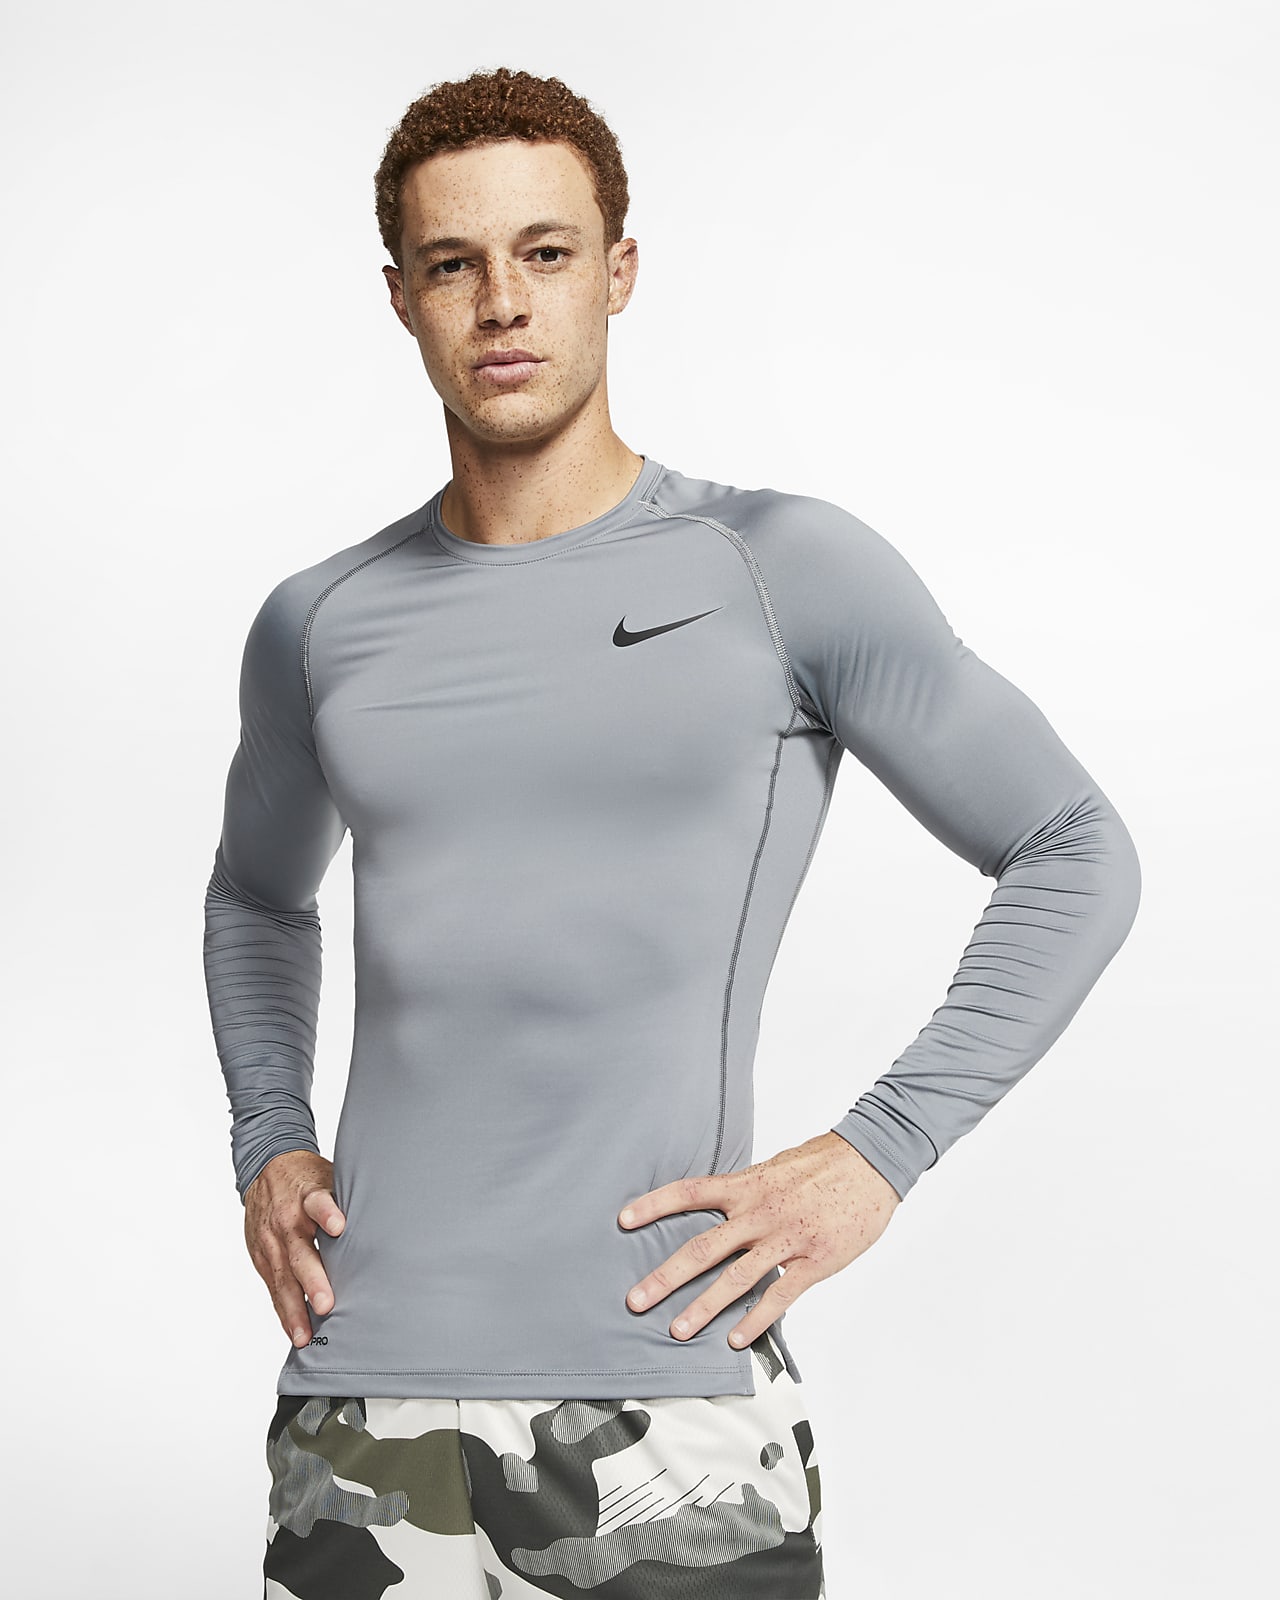 Nike Pro Men's Tight Fit Long-Sleeve 